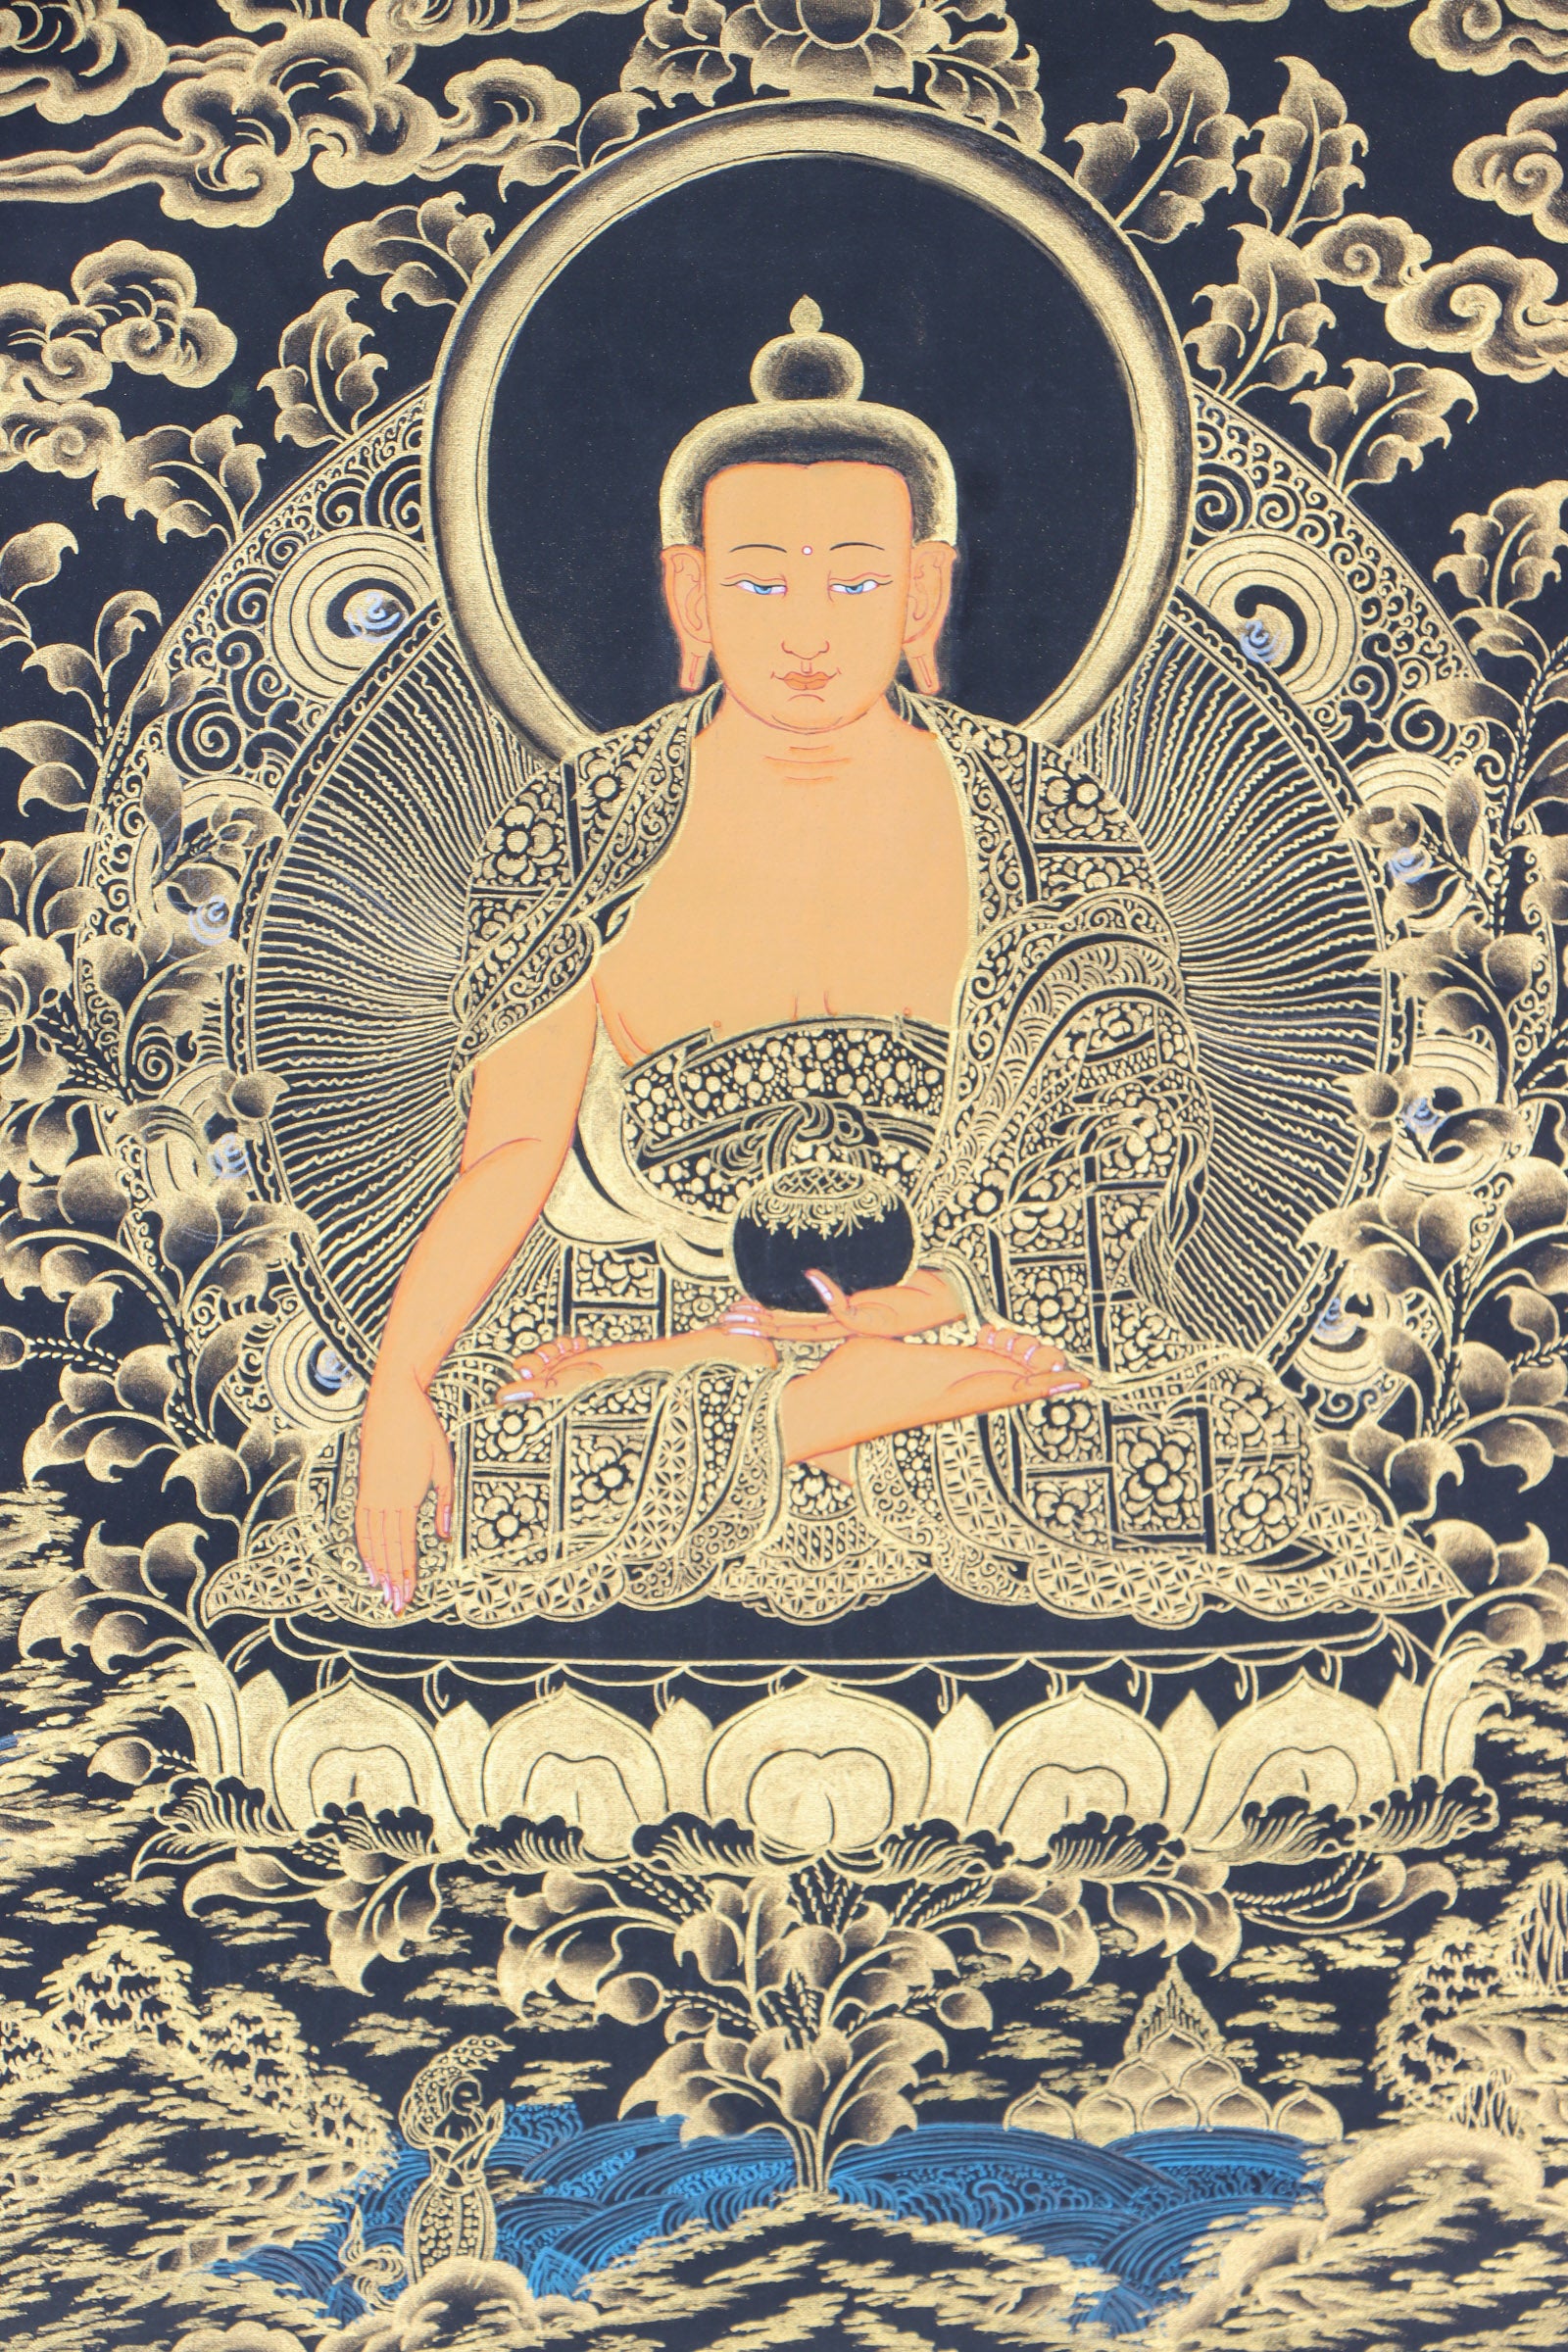 Shakyamuni Buddha Thangka Painting for peace and enlightenment.